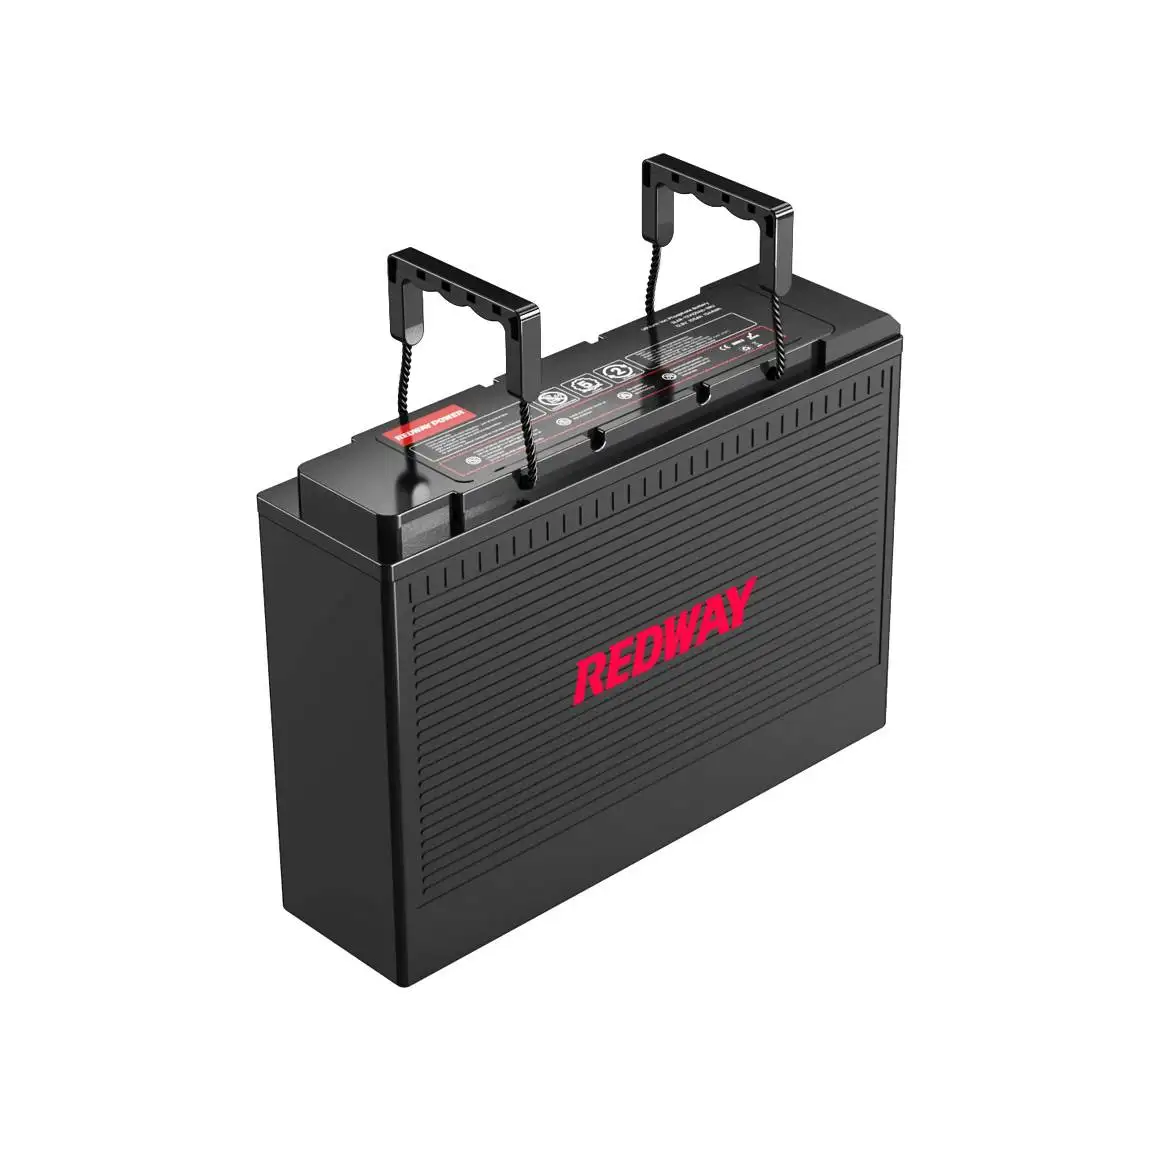 Redway 12V 100Ah EU China Lithium Iron Battery Manufacturer, LiFePO4/NCM Battery